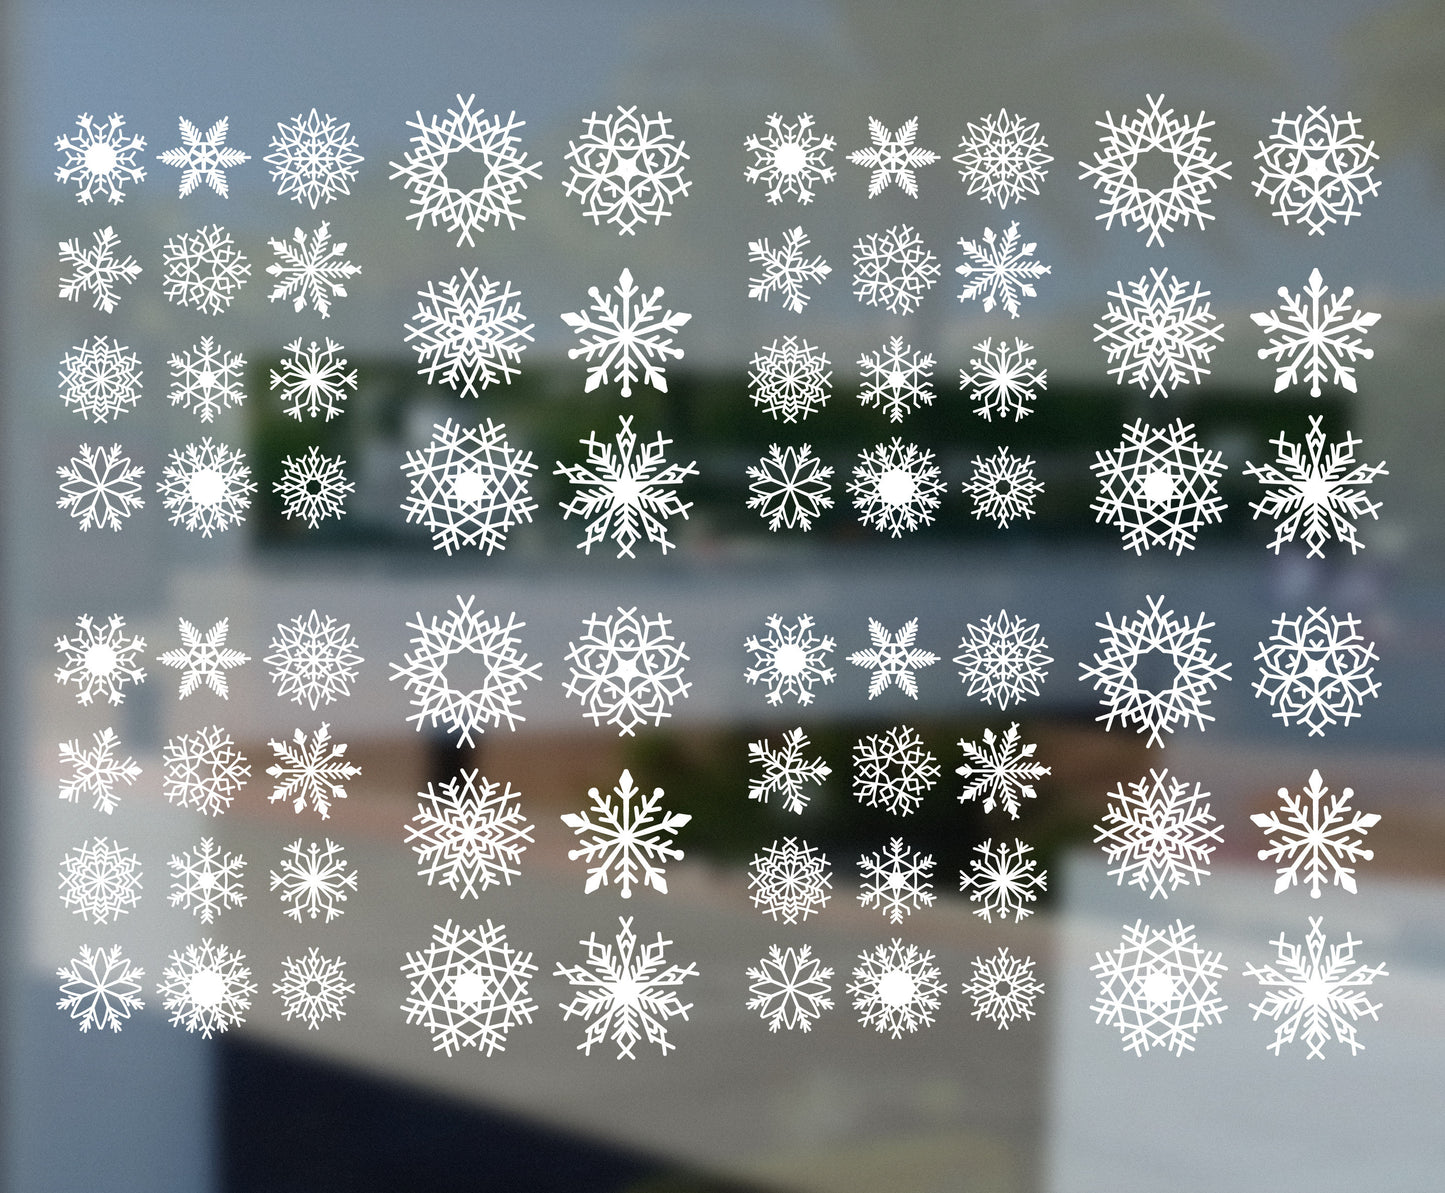 Snowflake Window Stickers 72 Pack | 3 cm - 4.5 cm Snowflakes Decals